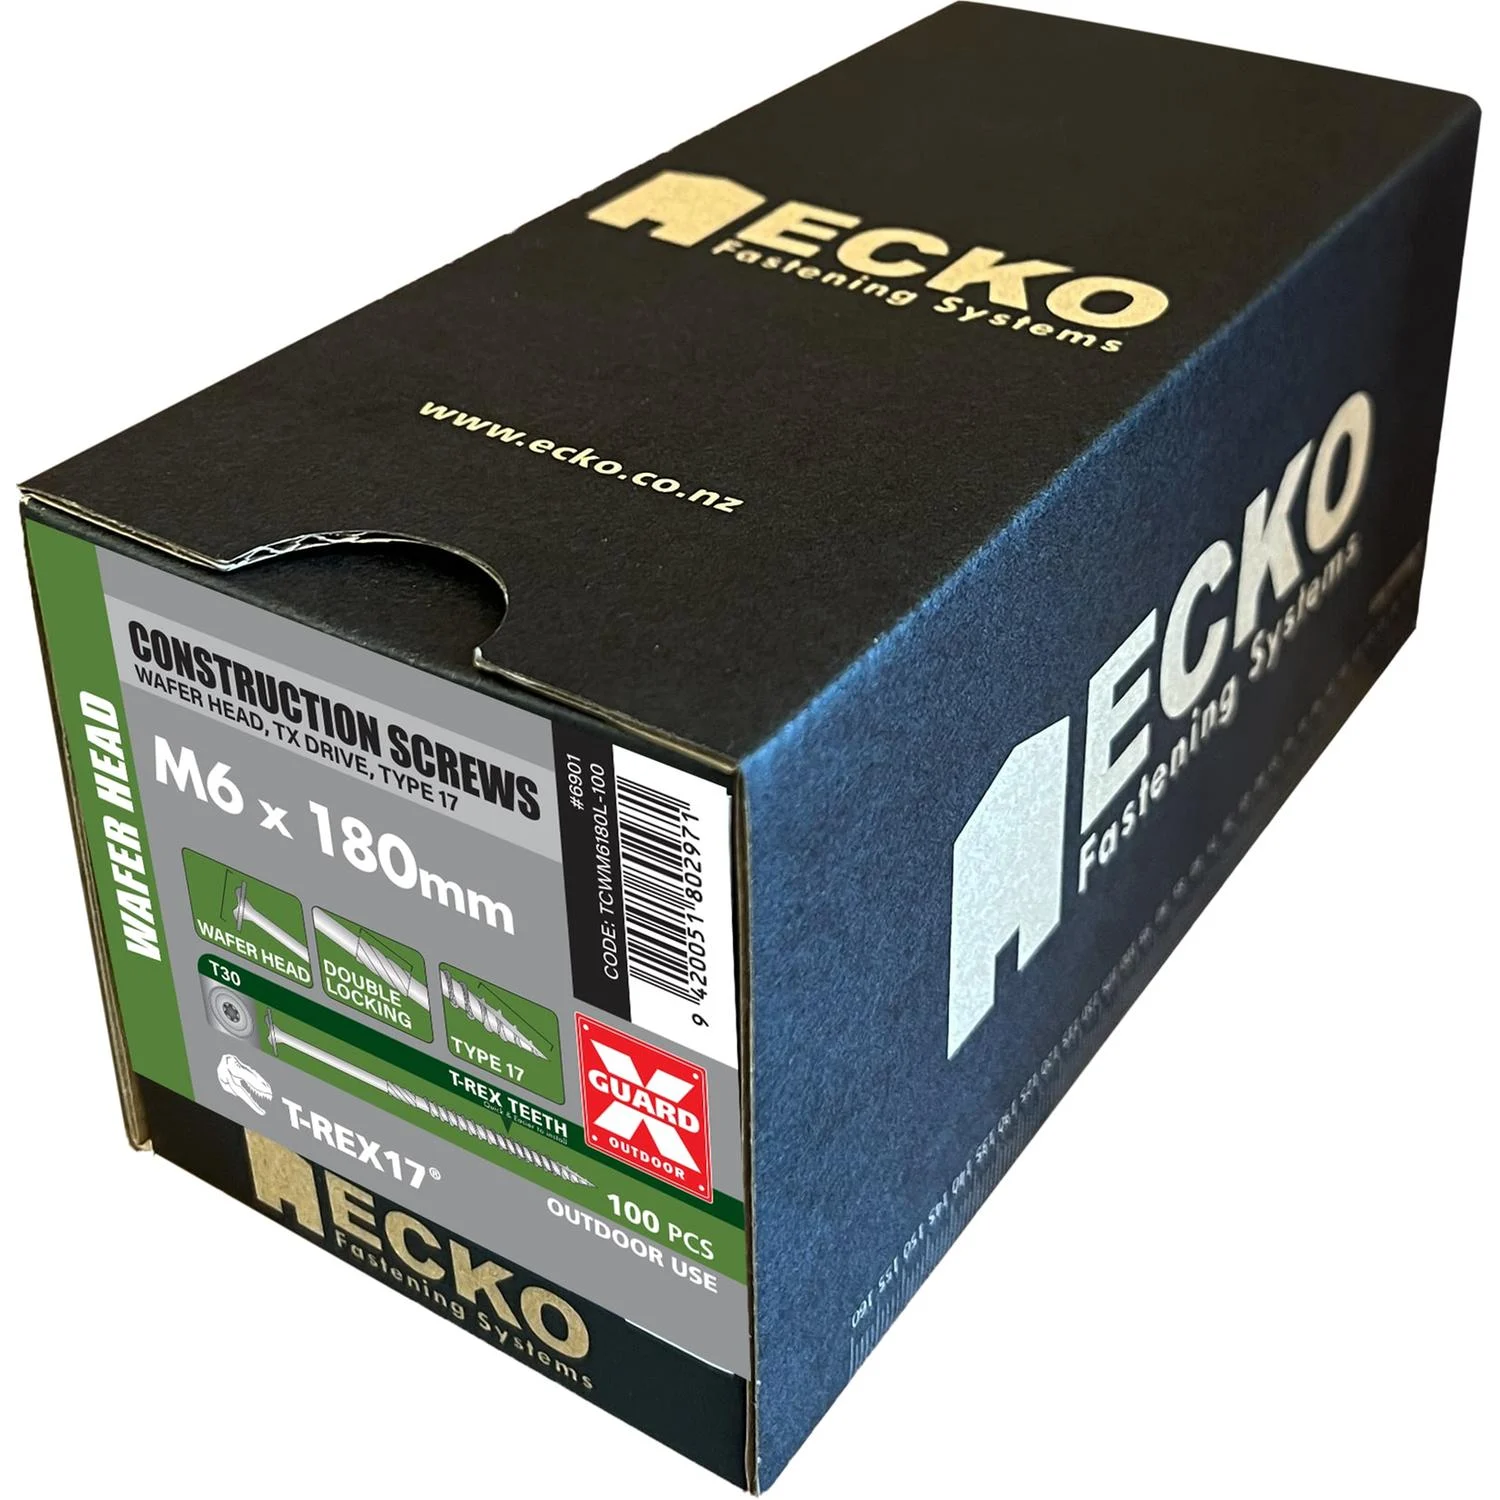 Ecko T-Rex17 Wafer Head Construction Screws M6 X 180Mm (500 Pack)